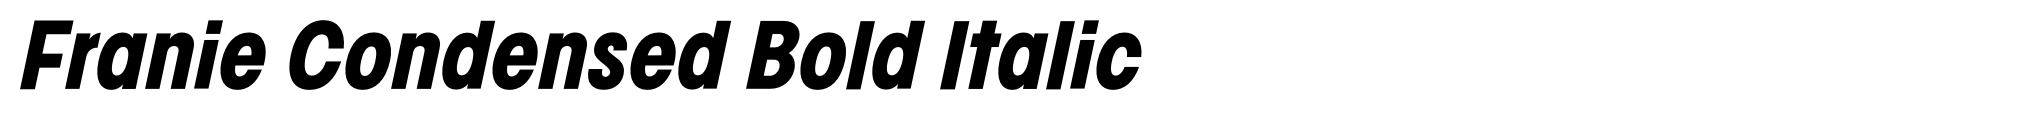 Franie Condensed Bold Italic image